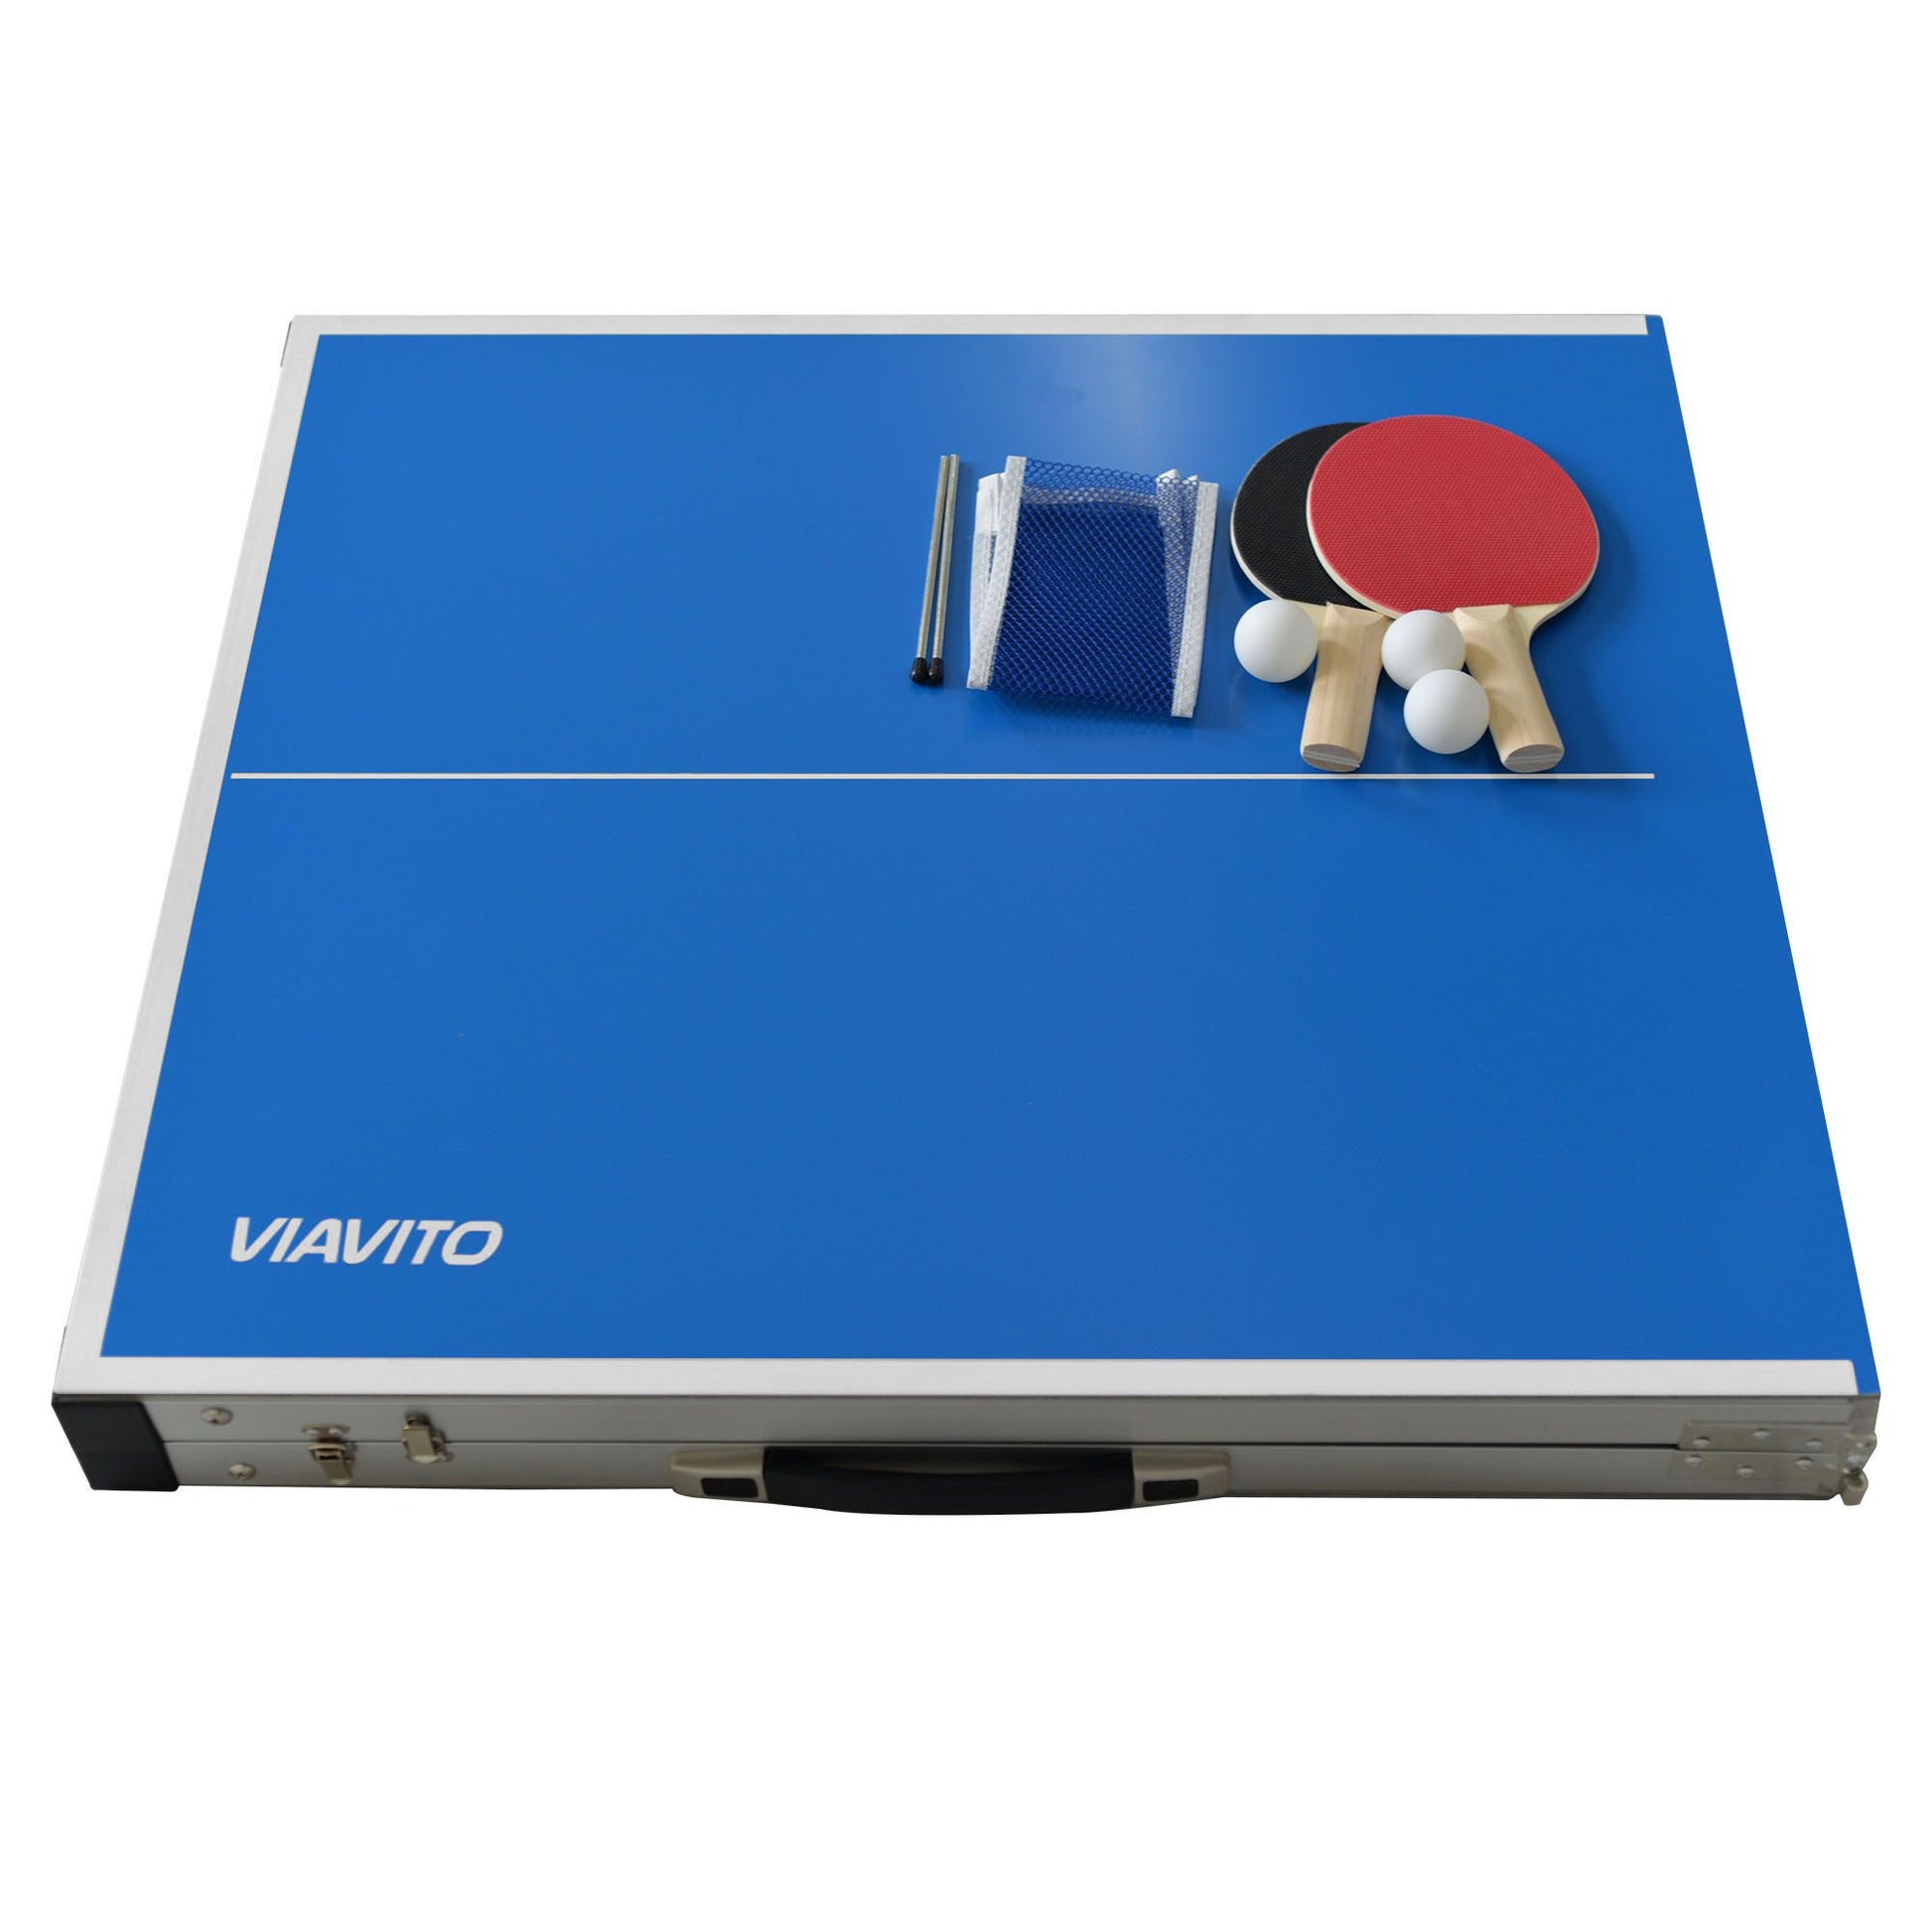 |Viavito PlayCase Table Tennis Table - Set - New|